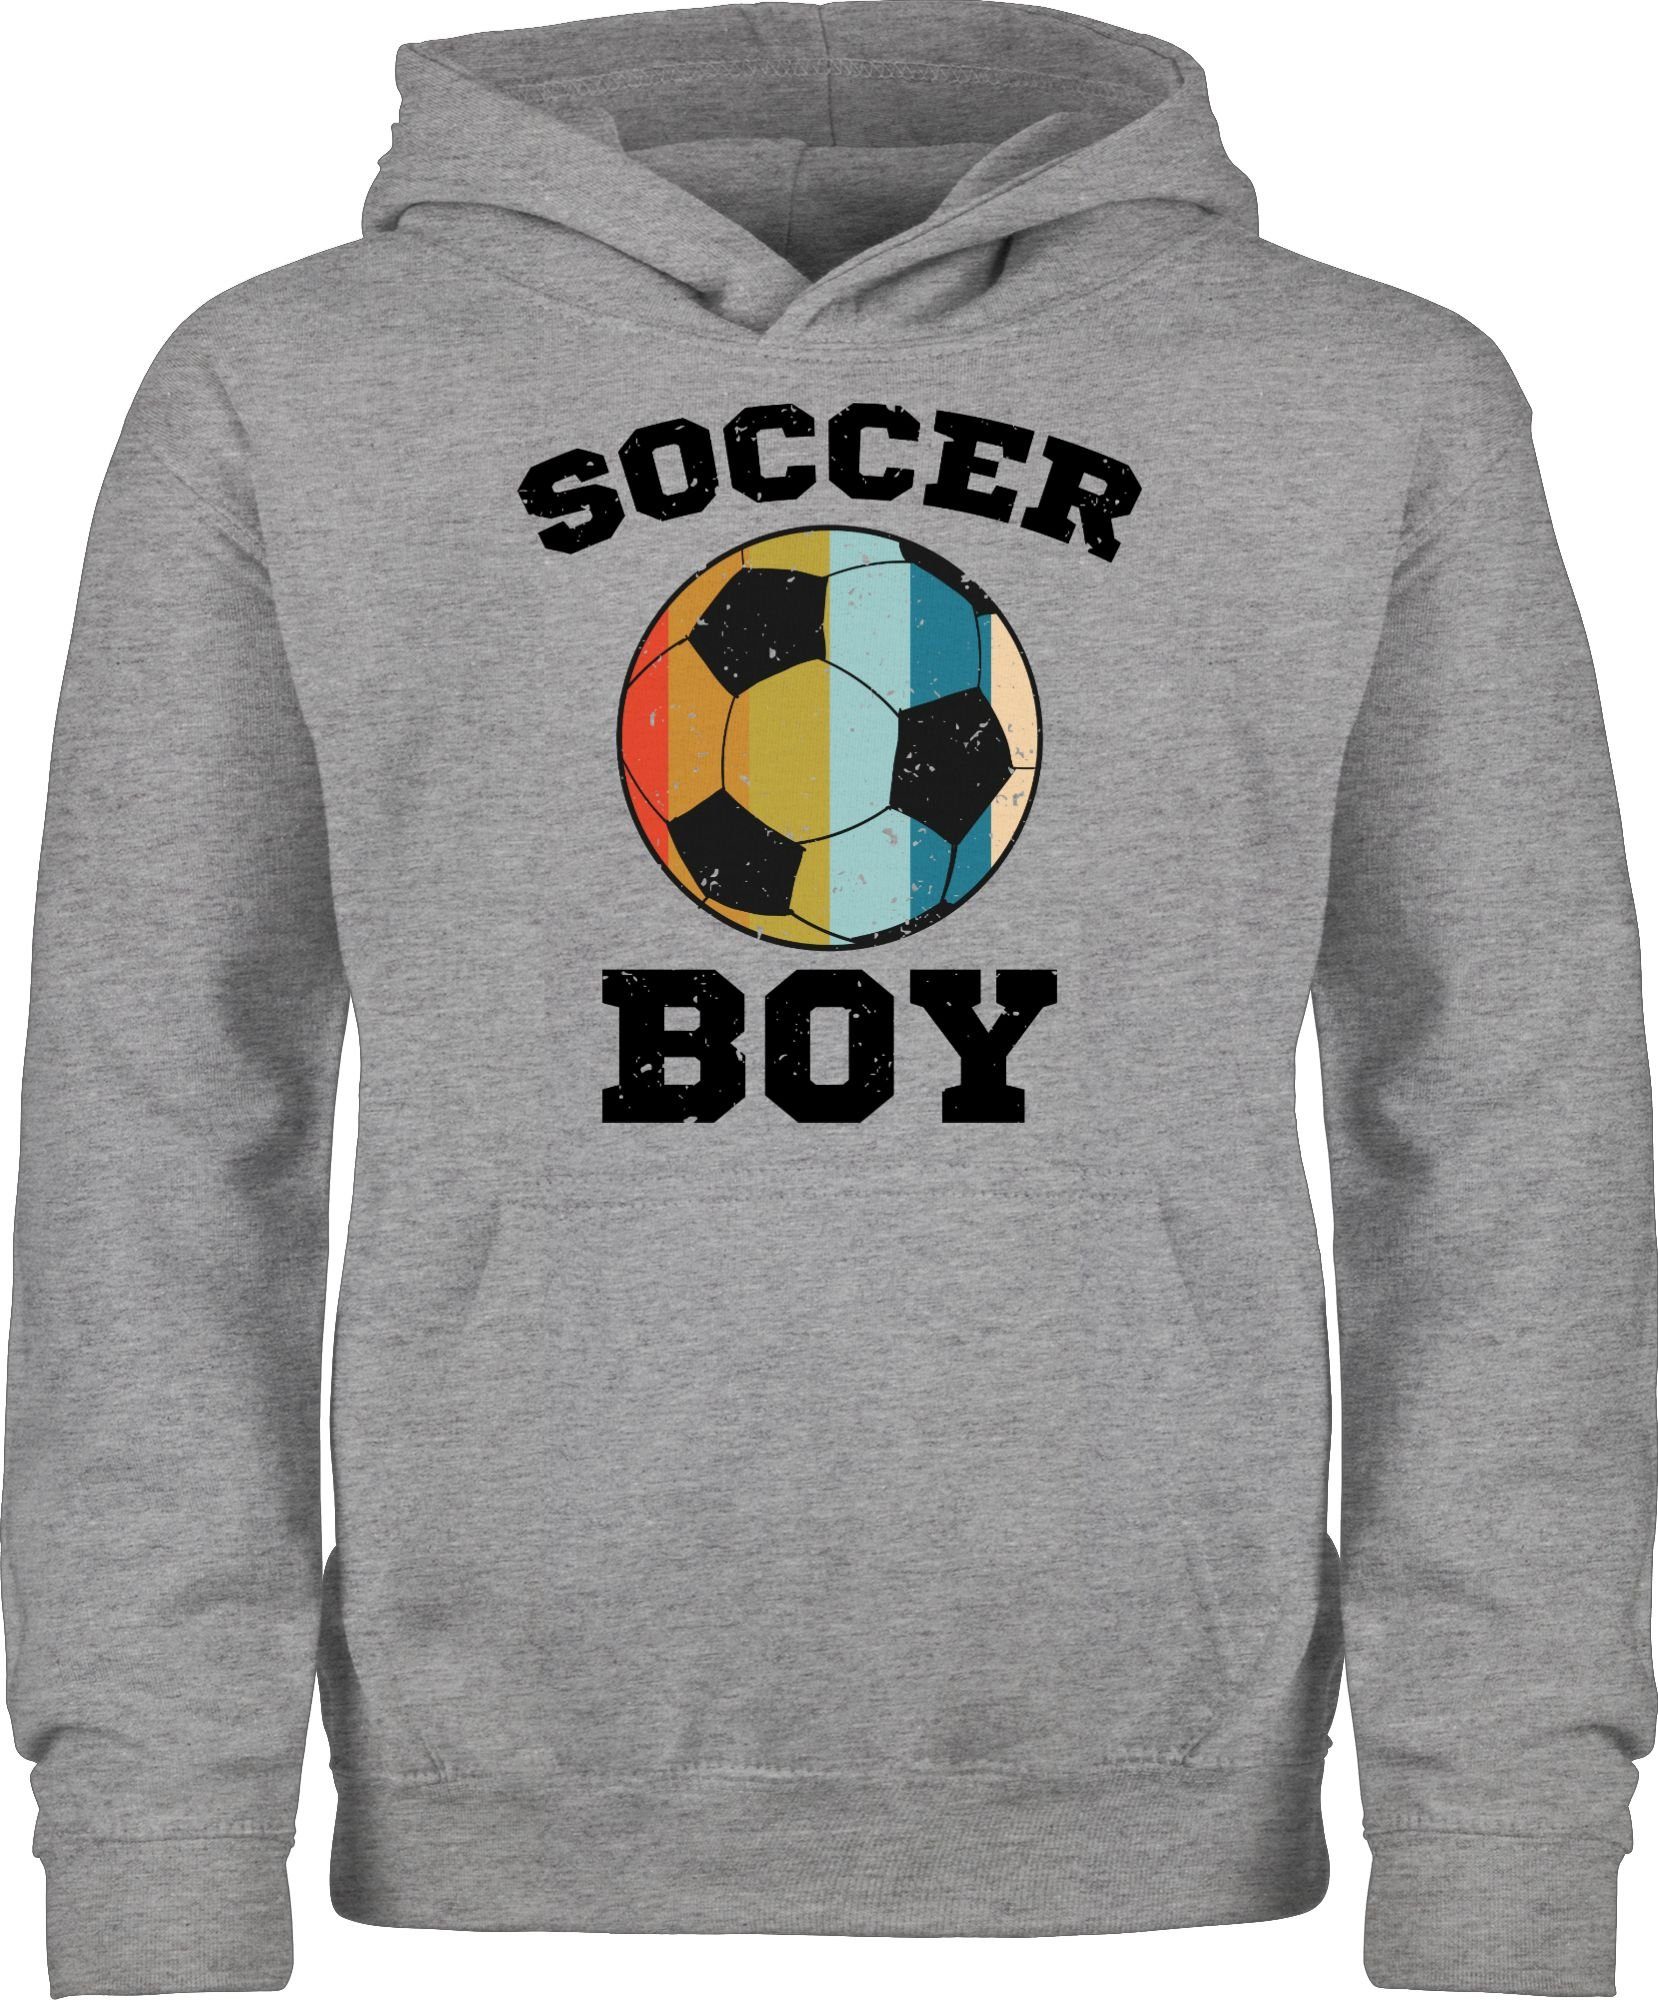 Shirtracer Hoodie Soccer Boy Vintage Kinder Sport Kleidung 3 Grau meliert